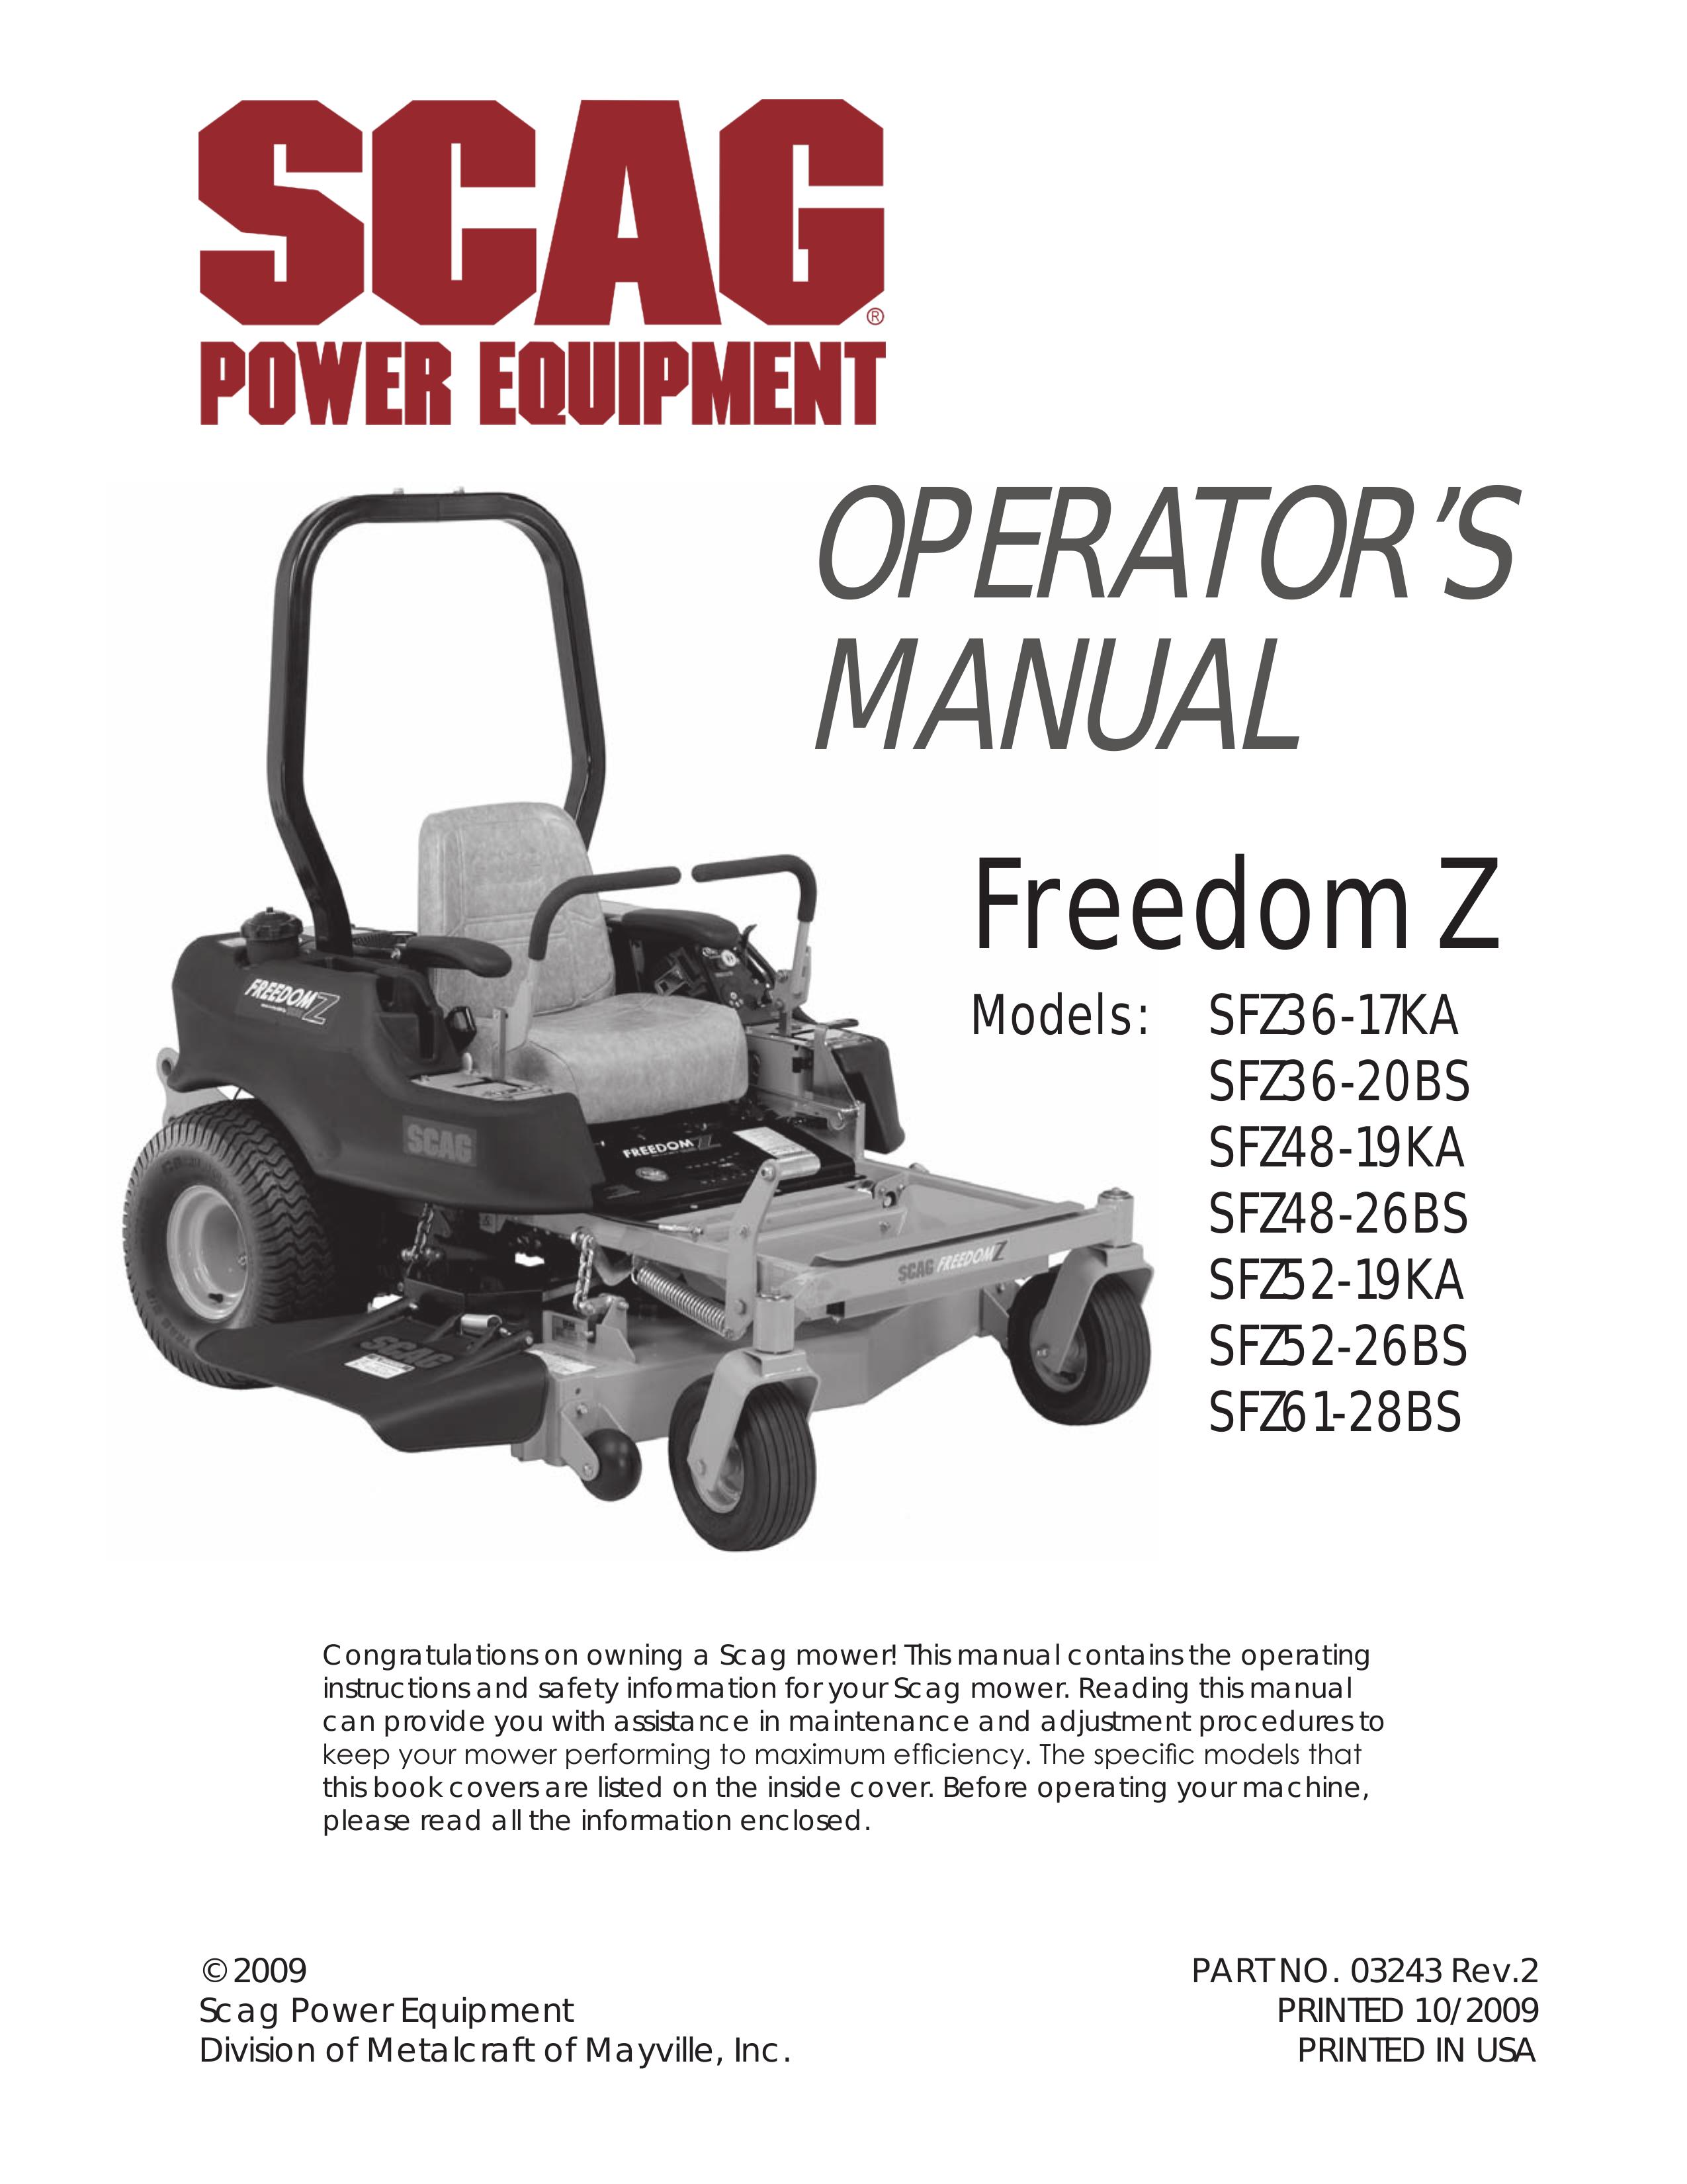 Scag Power Equipment SFZ61-28BS Lawn Mower User Manual